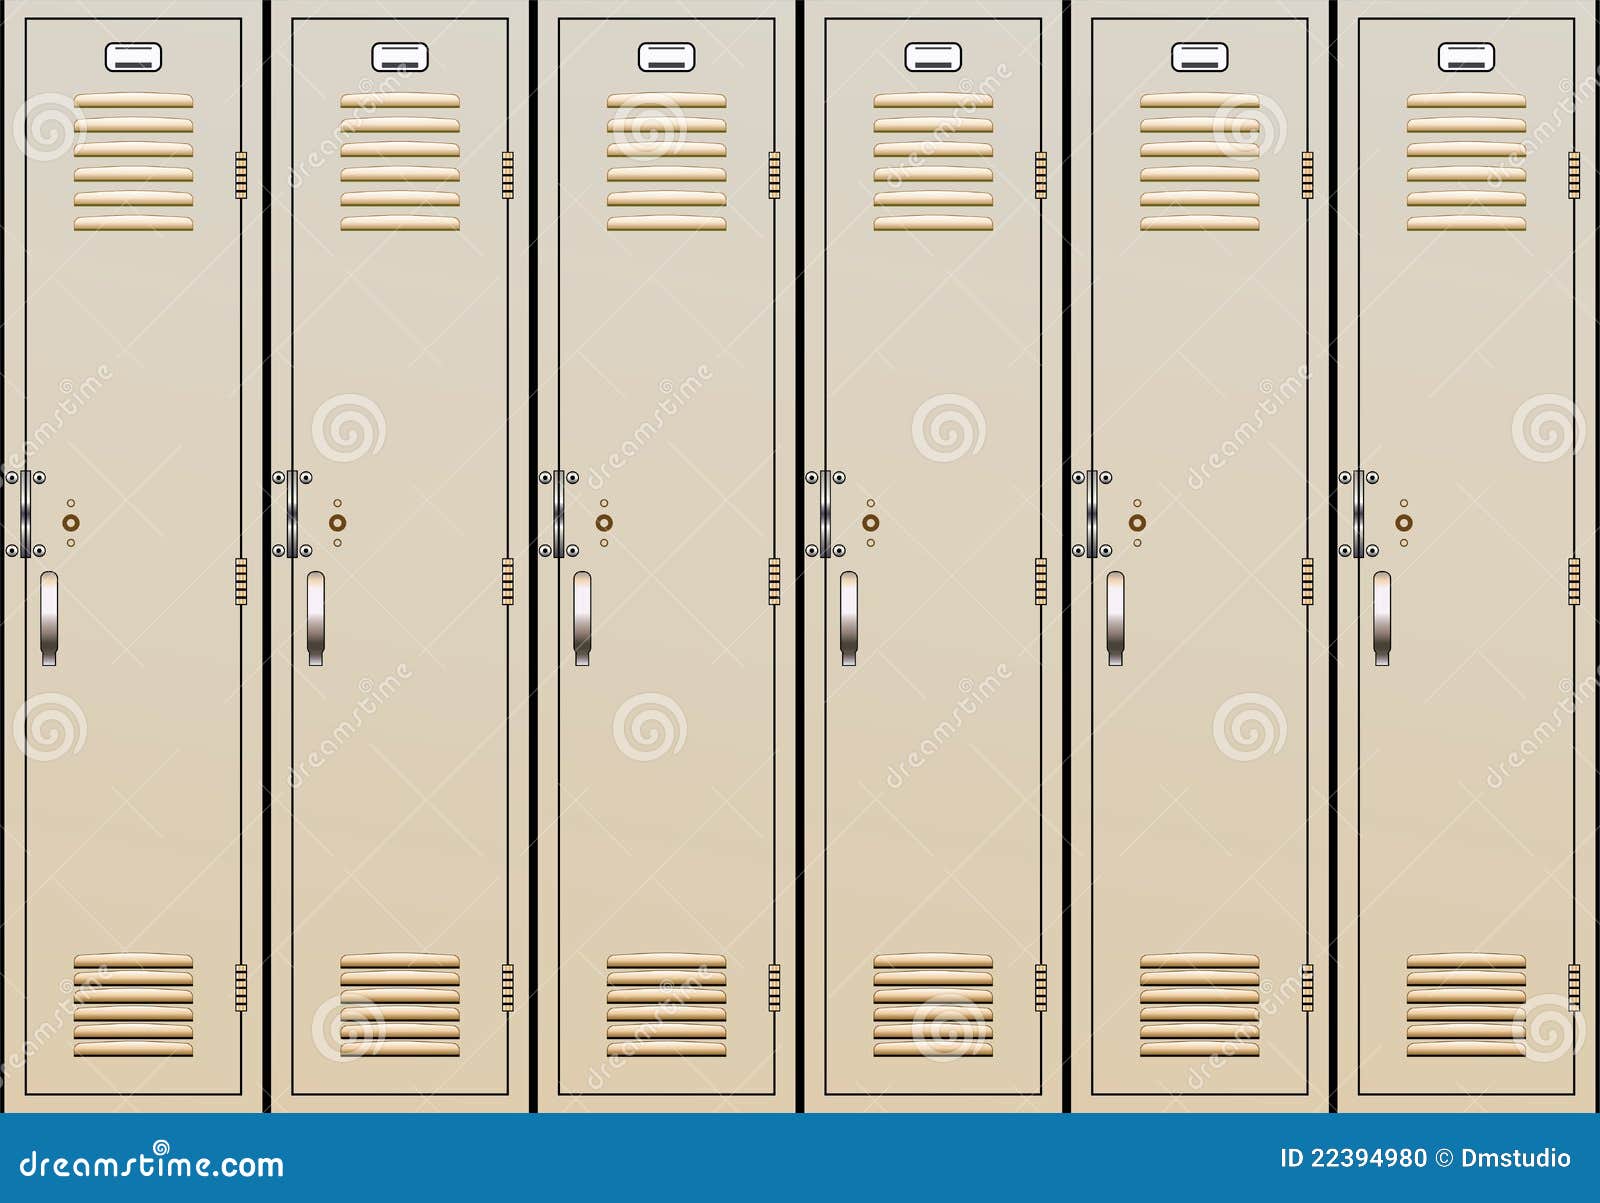 school locker clipart - photo #12